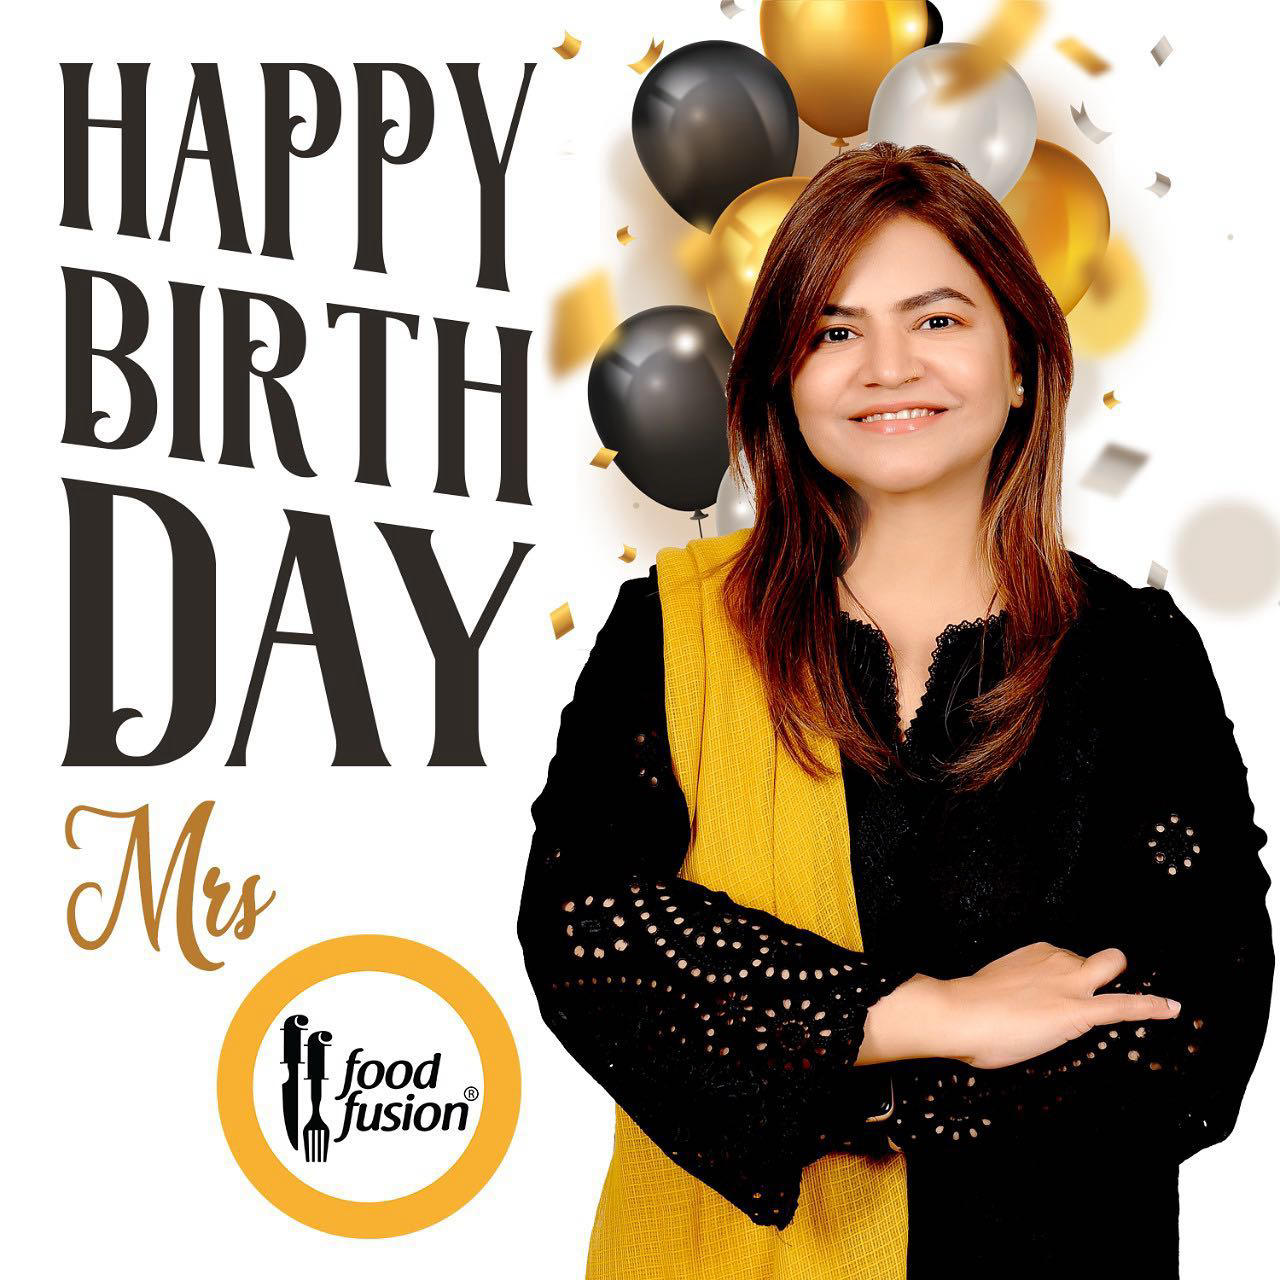 Food Fusion - Join team Food Fusion to wish a very happy birthday to Mrs Food Fusion #saimaasad_ff #